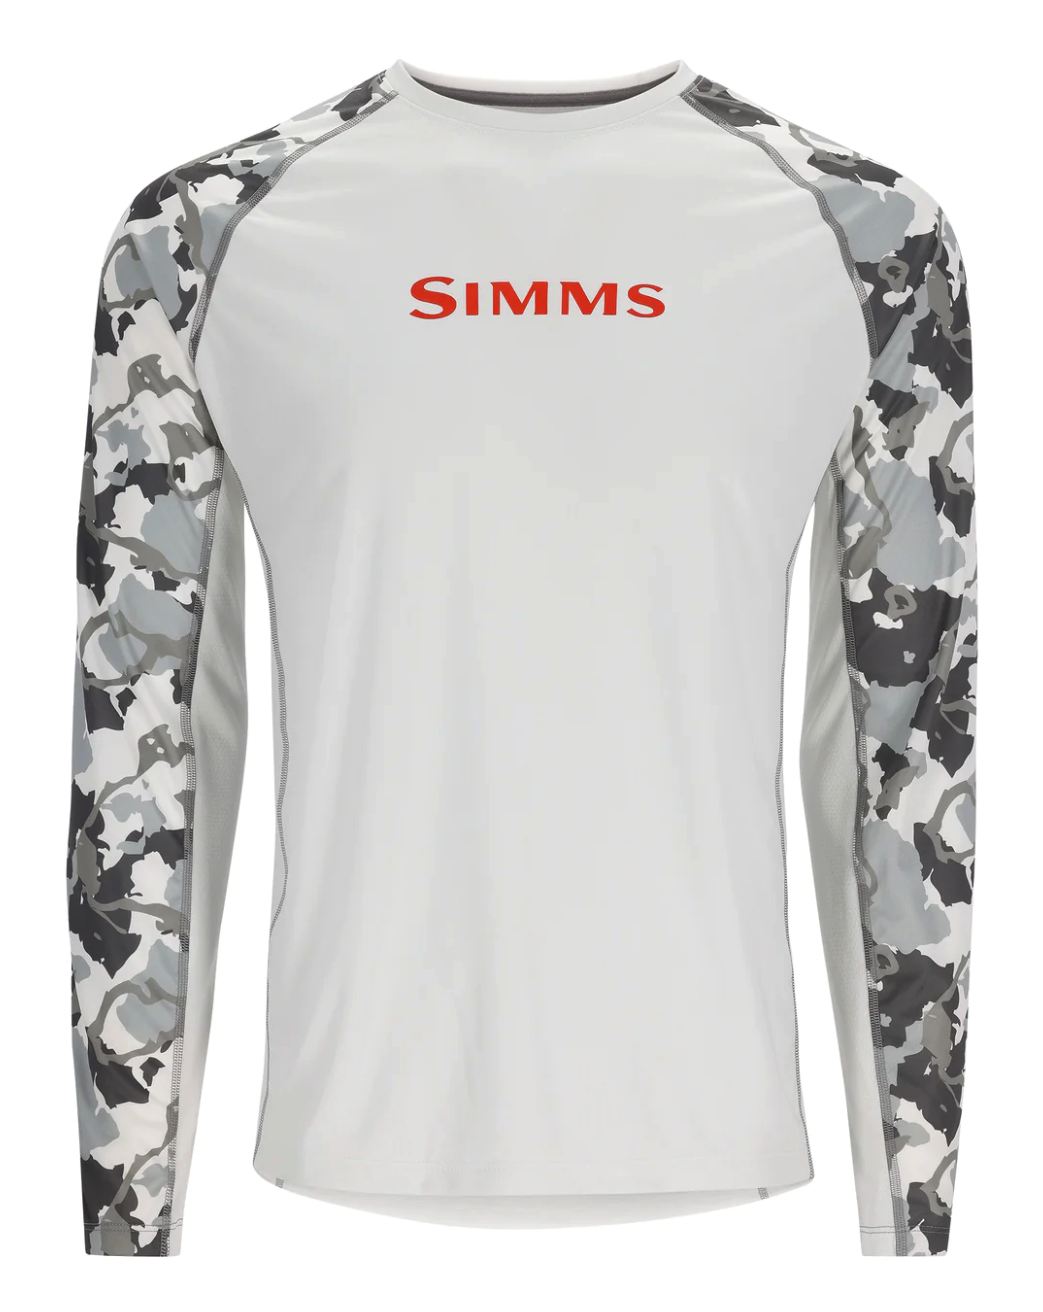 Simms Challenger Solar Crew, Buy Simms Fishing Shirts Online, Best Simms  Sun Protection Shirt